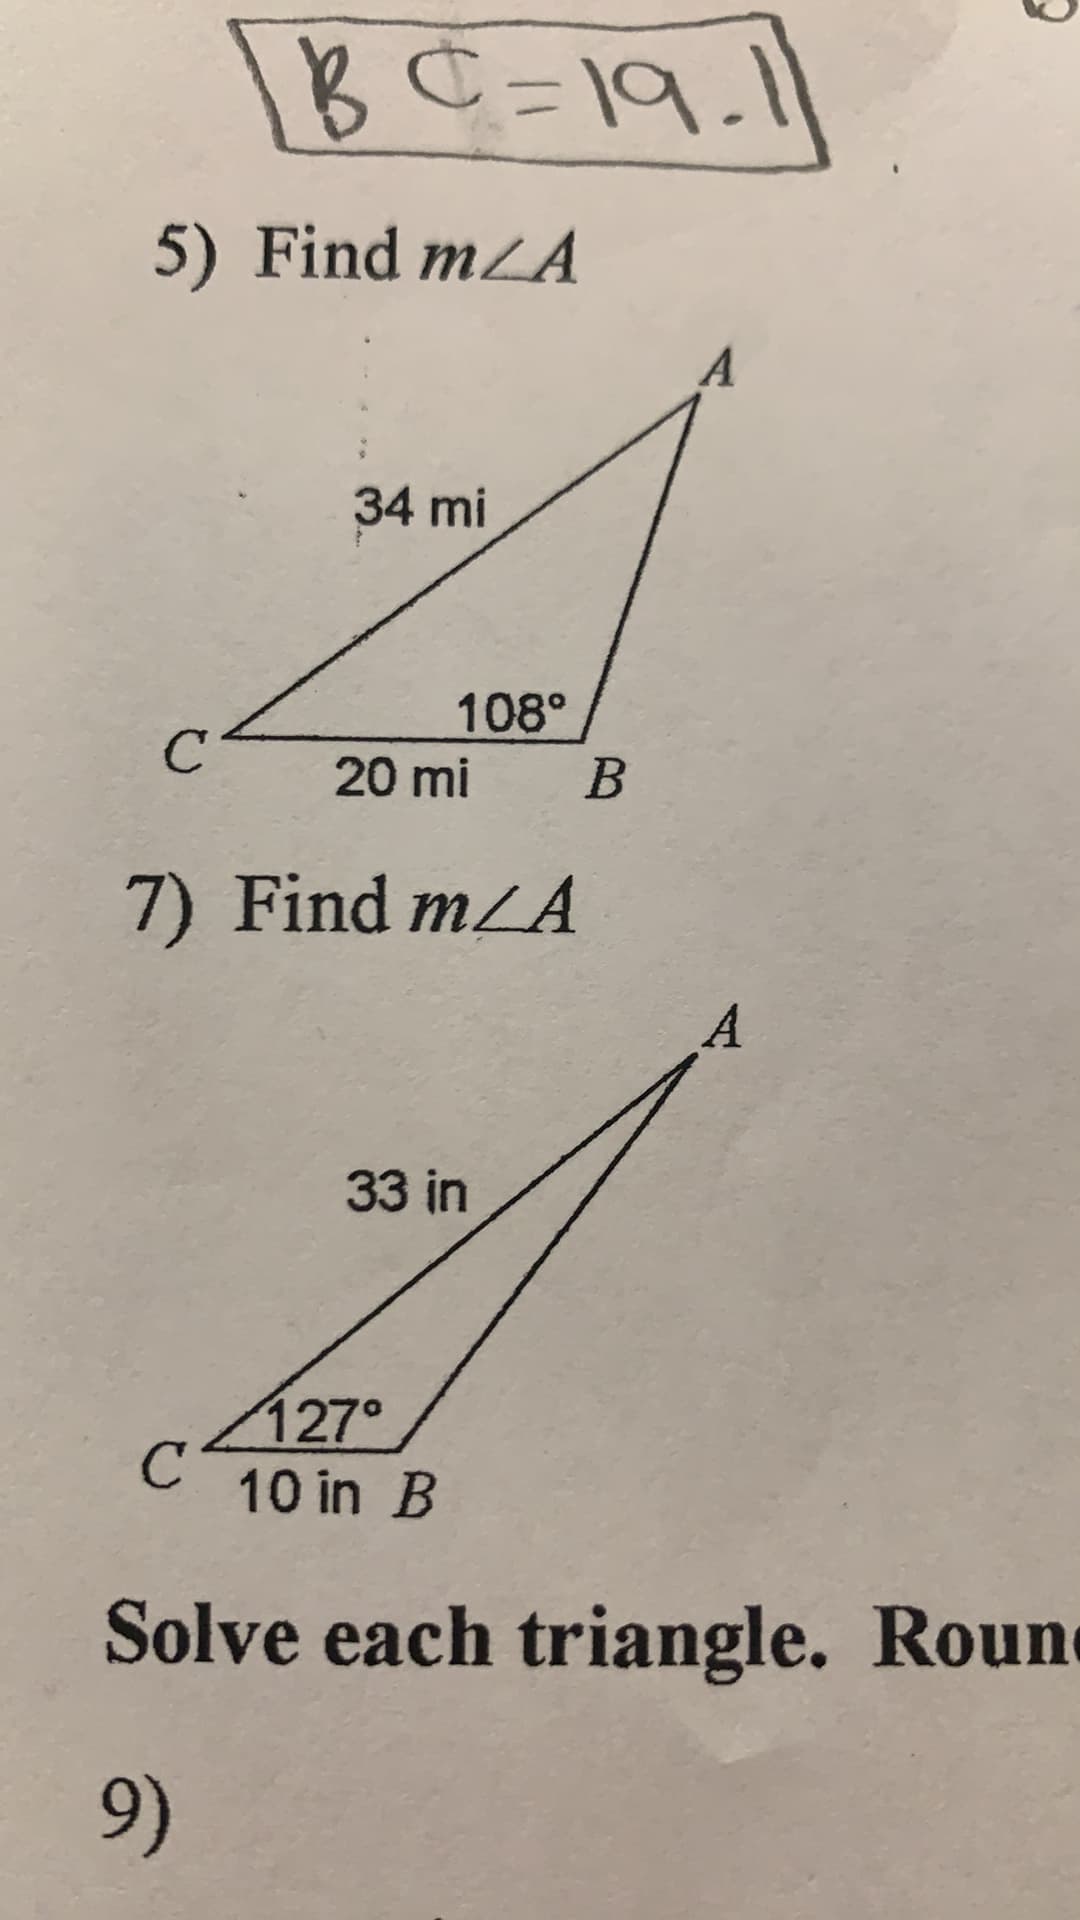 5) Find mLA
A.
34 mi
108°
20 mi
B.
7) Find m/A
33 in
127°
C10 in B
Solve each triangle. Roun
9)
